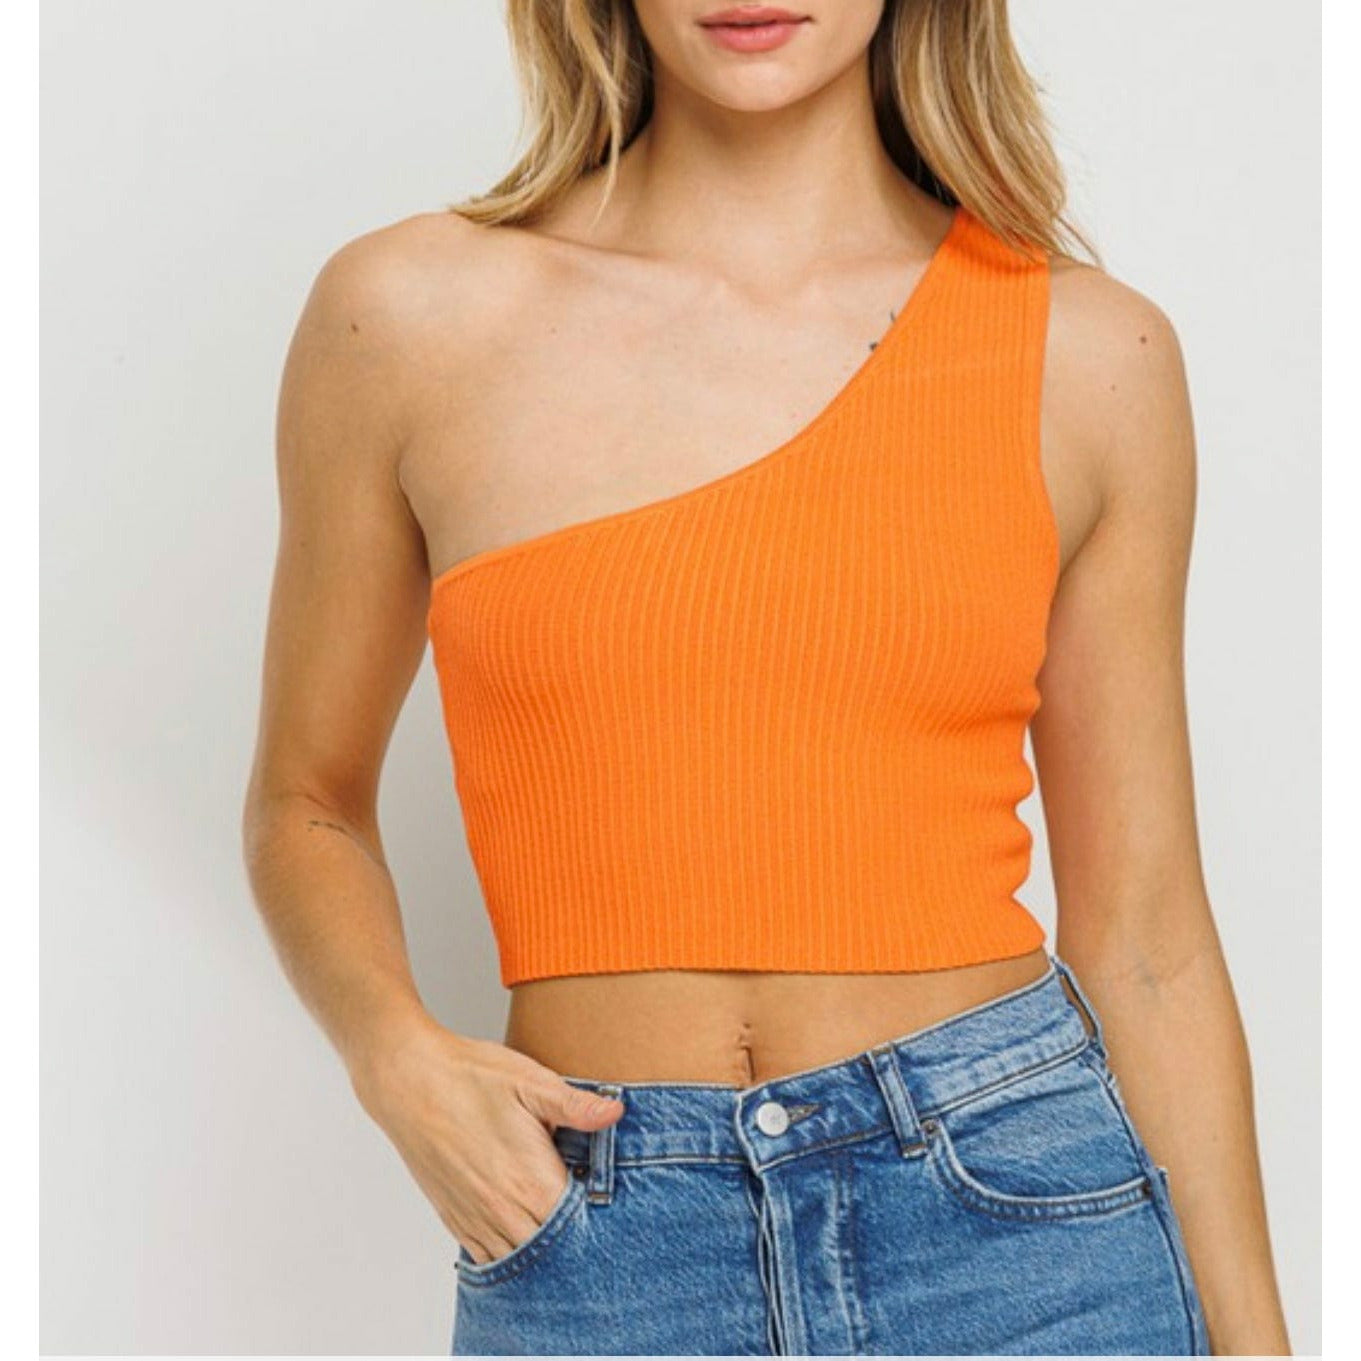 Orange One Shoulder Crop Top